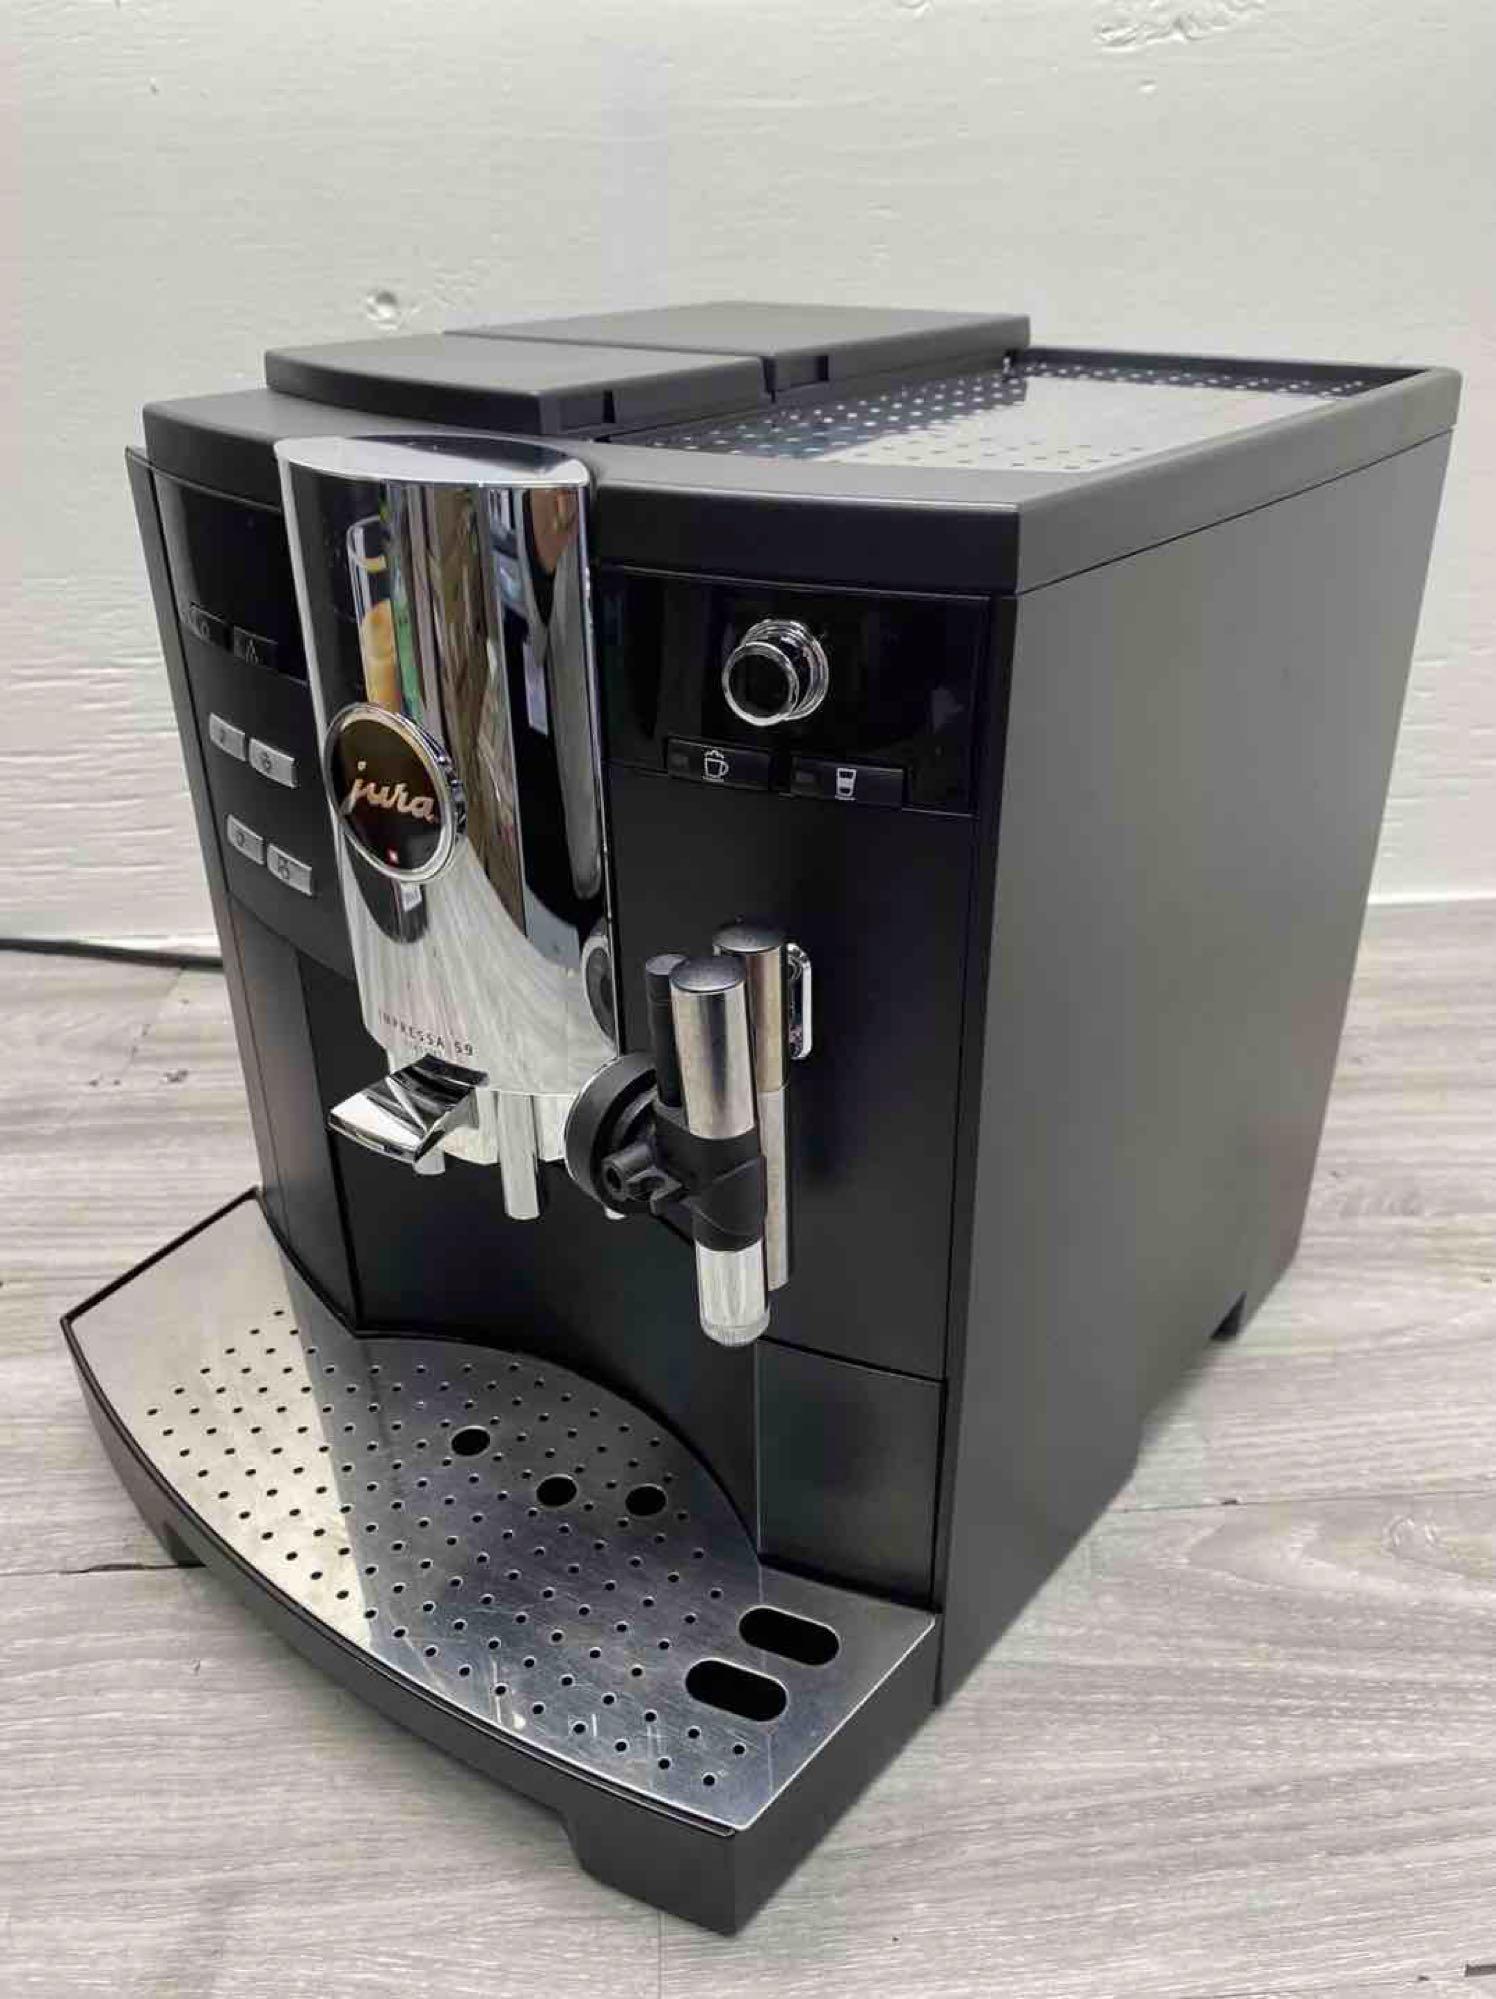 Jura S9 One-Touch Classic Superautomatic Espresso Machine